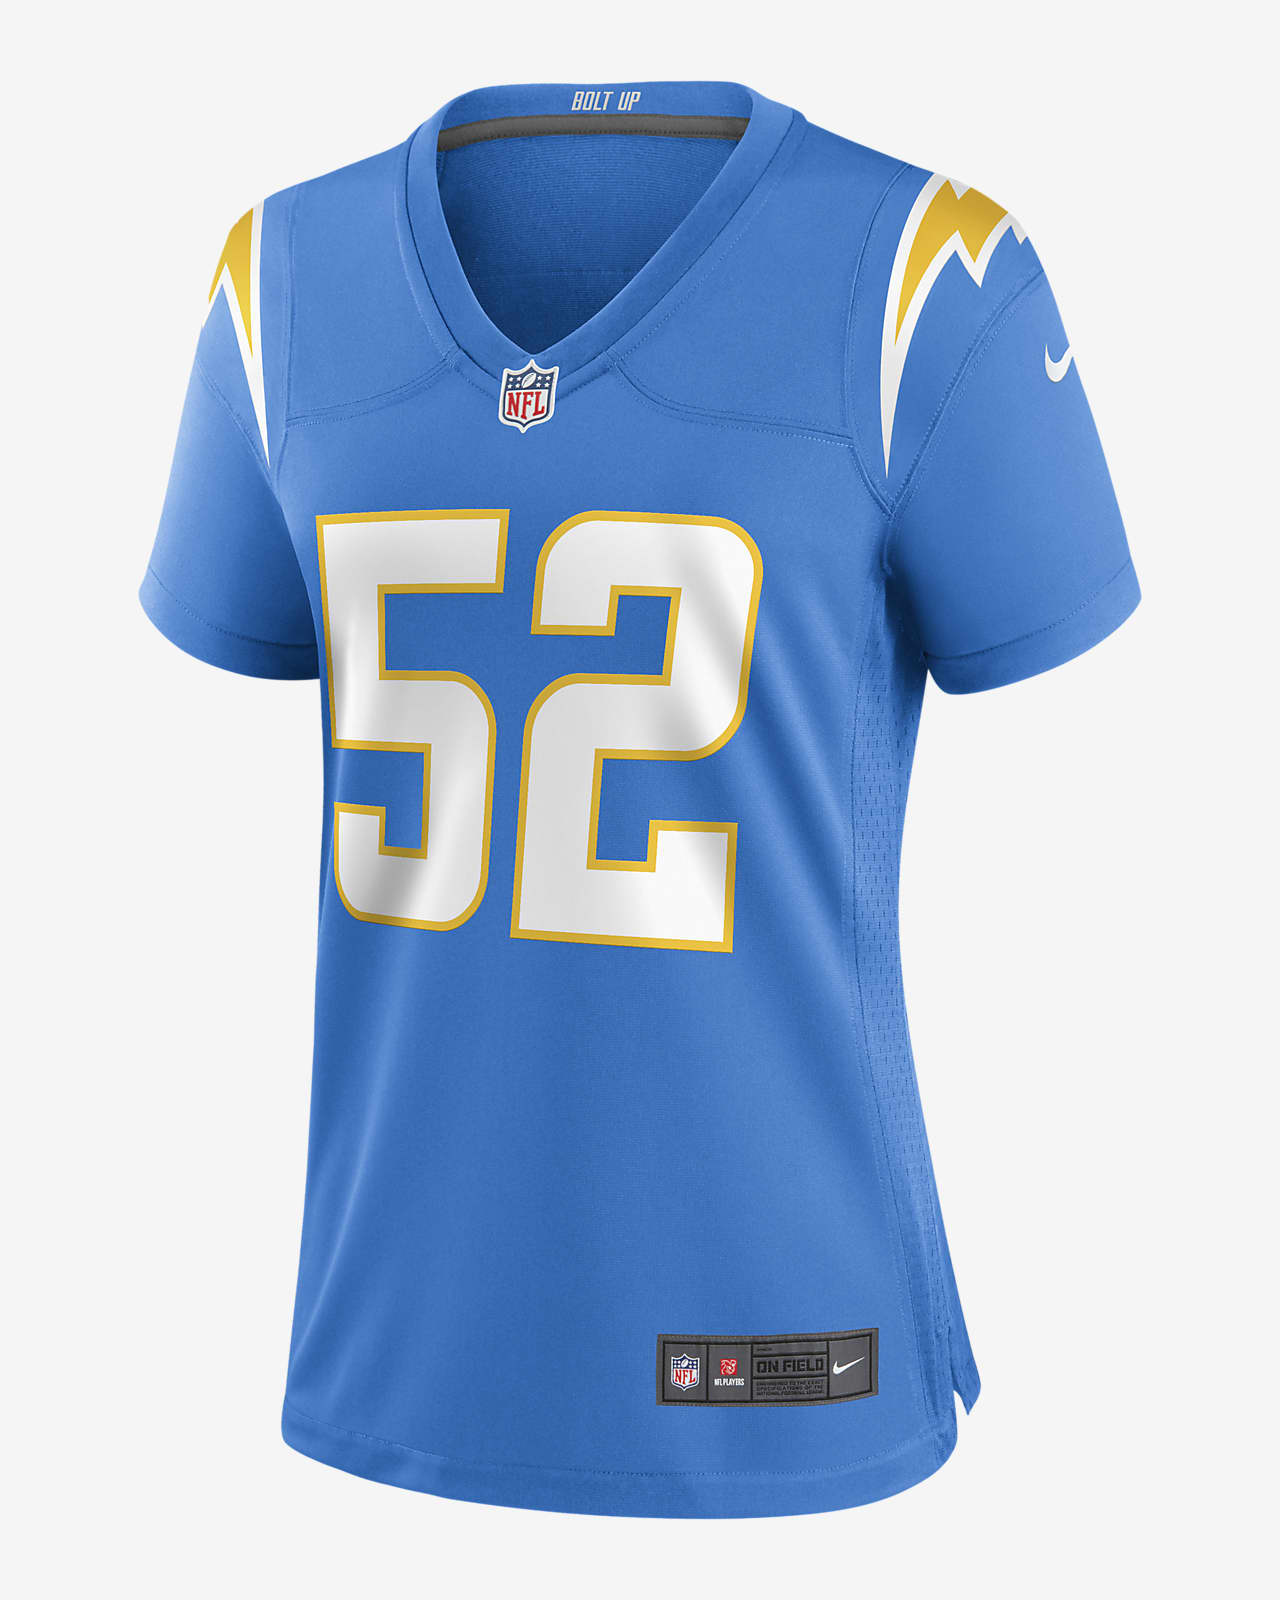 Deber Min pasta Jersey de fútbol americano Game para mujer NFL Los Angeles Chargers (Khalil  Mack). Nike.com